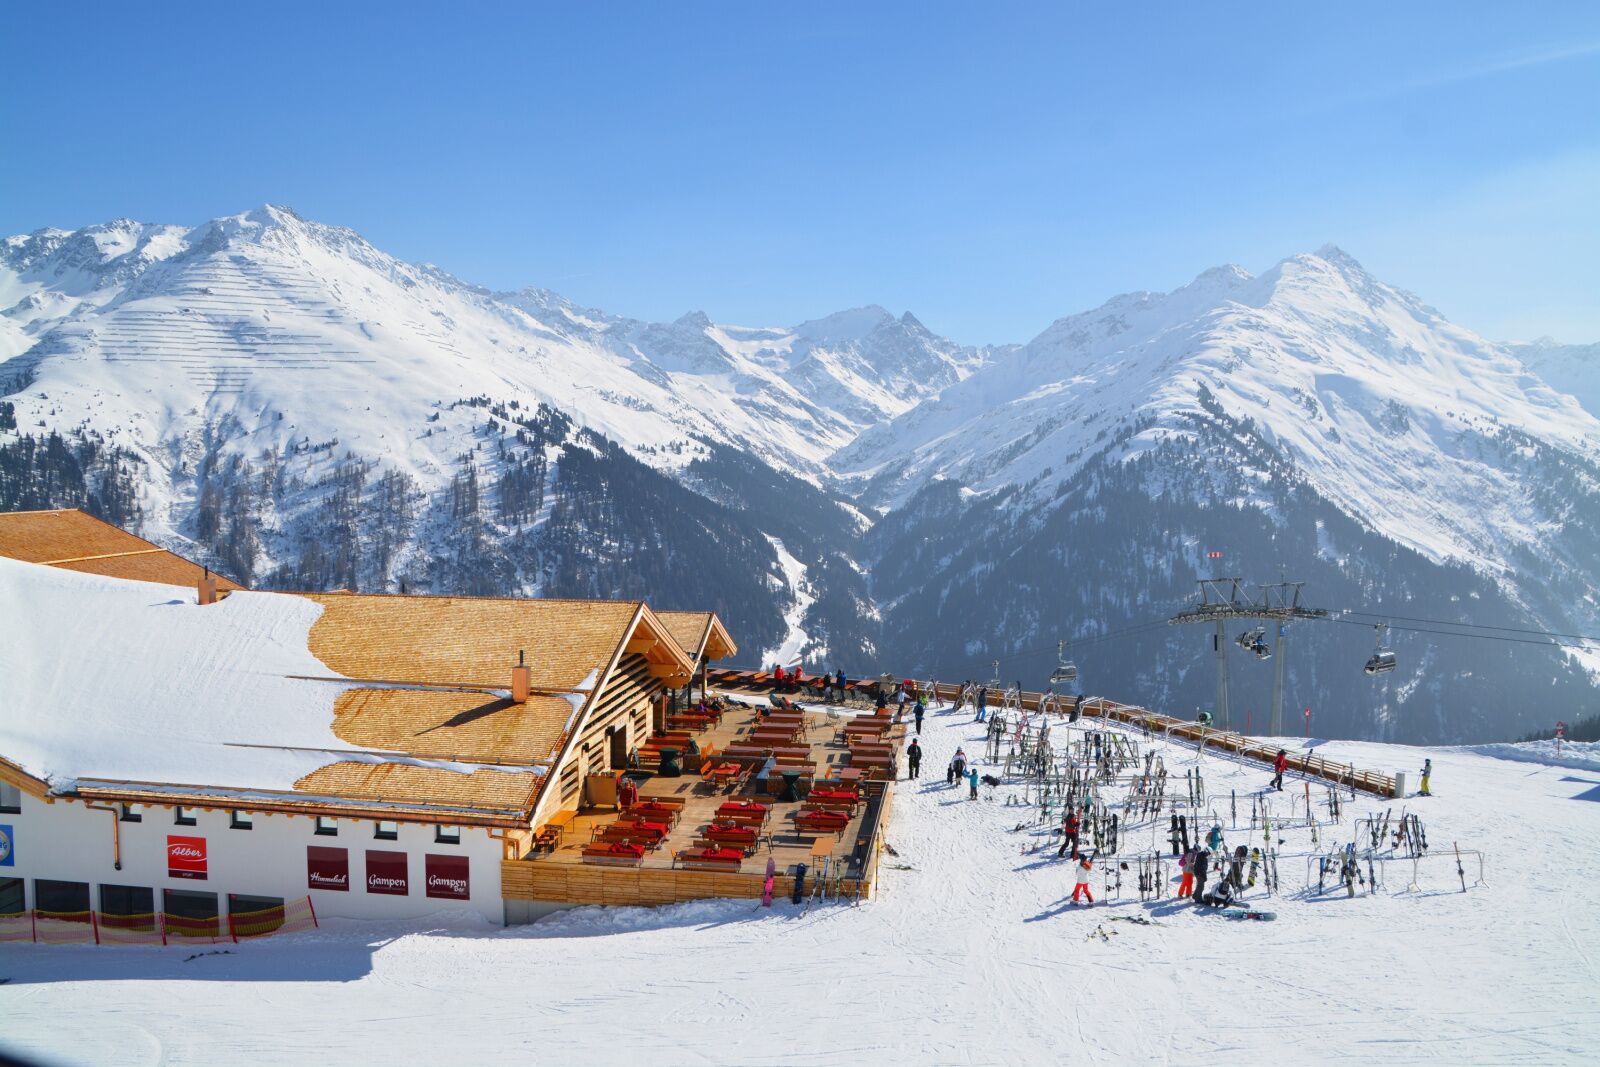 A bar at the Alps ski resort of St. Anton Austria